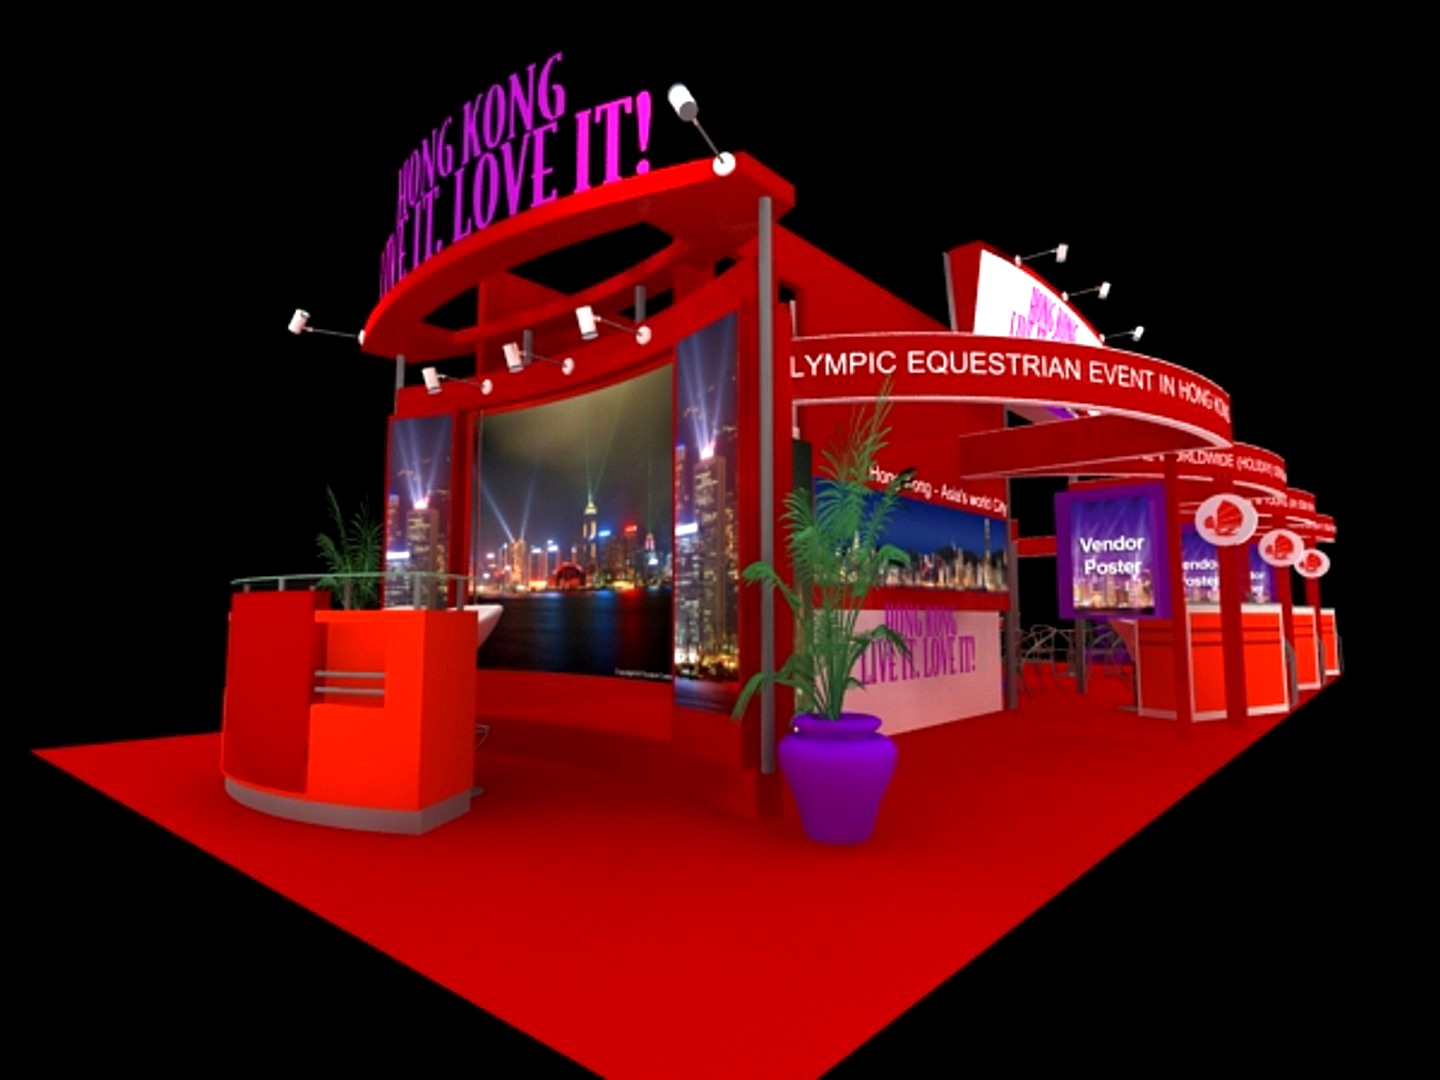 Hong Kong Tour Exhibition 6x15 Booth